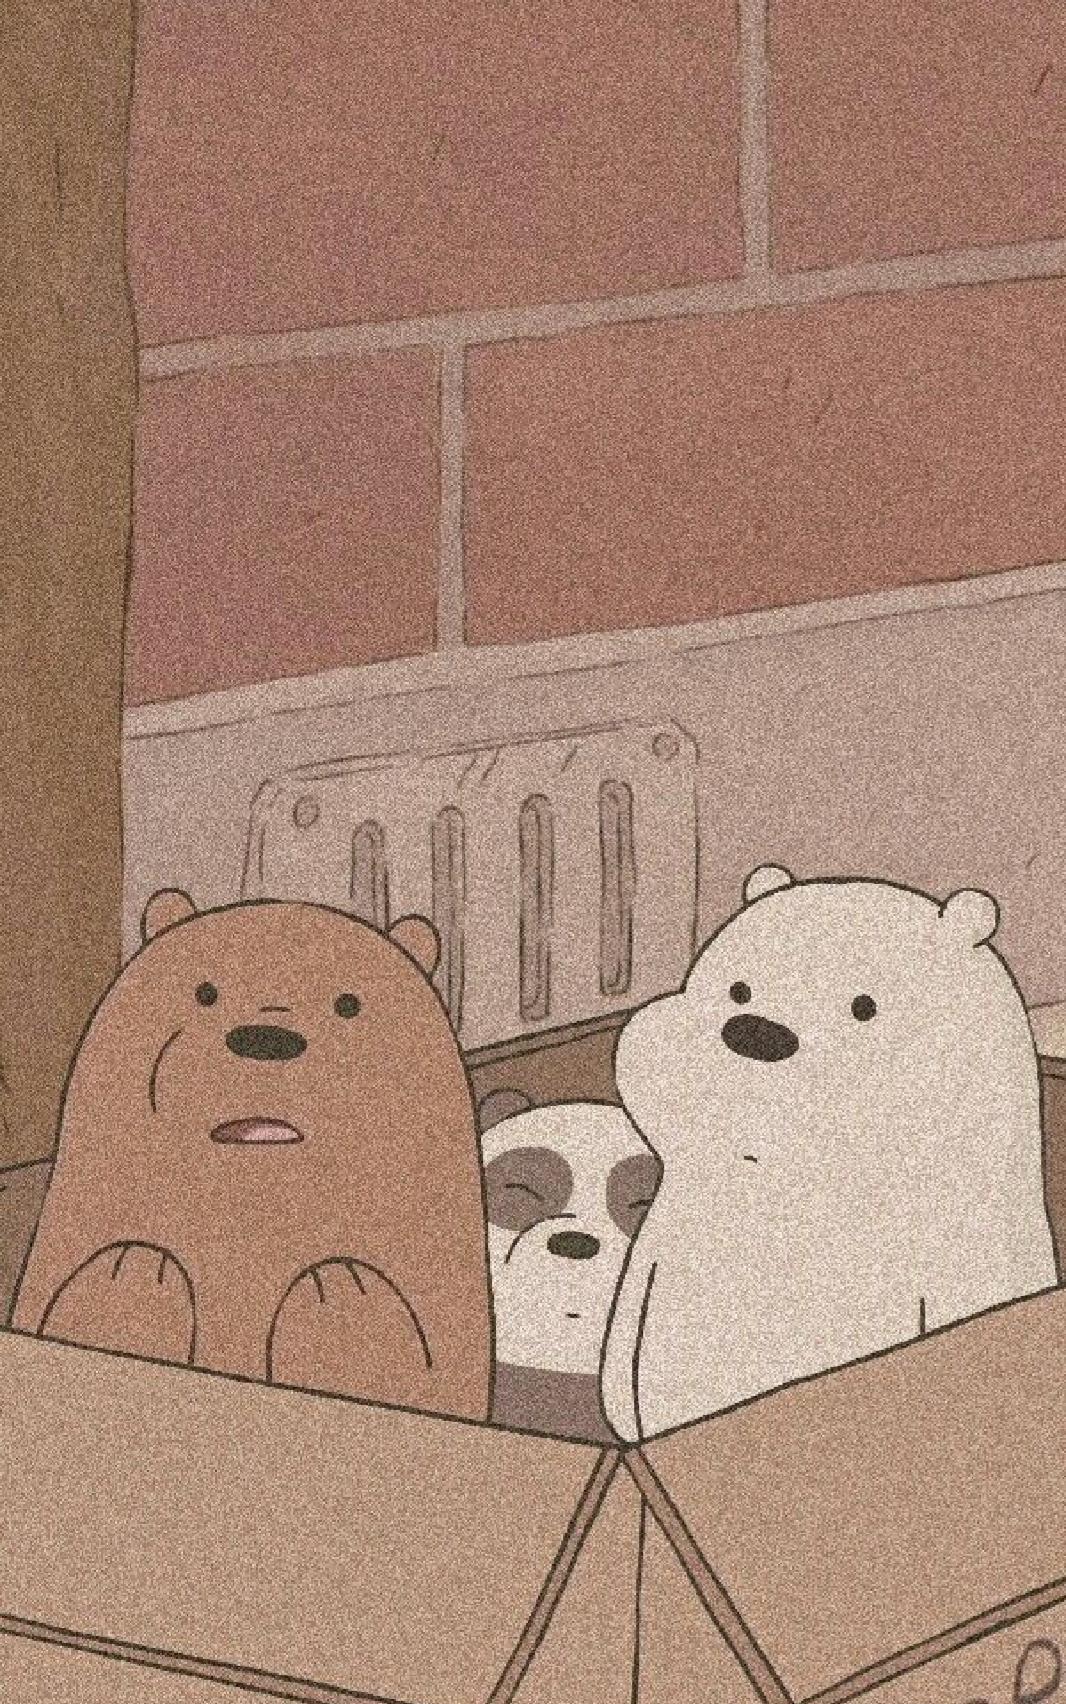 Grizzly, Panda, Ice bear